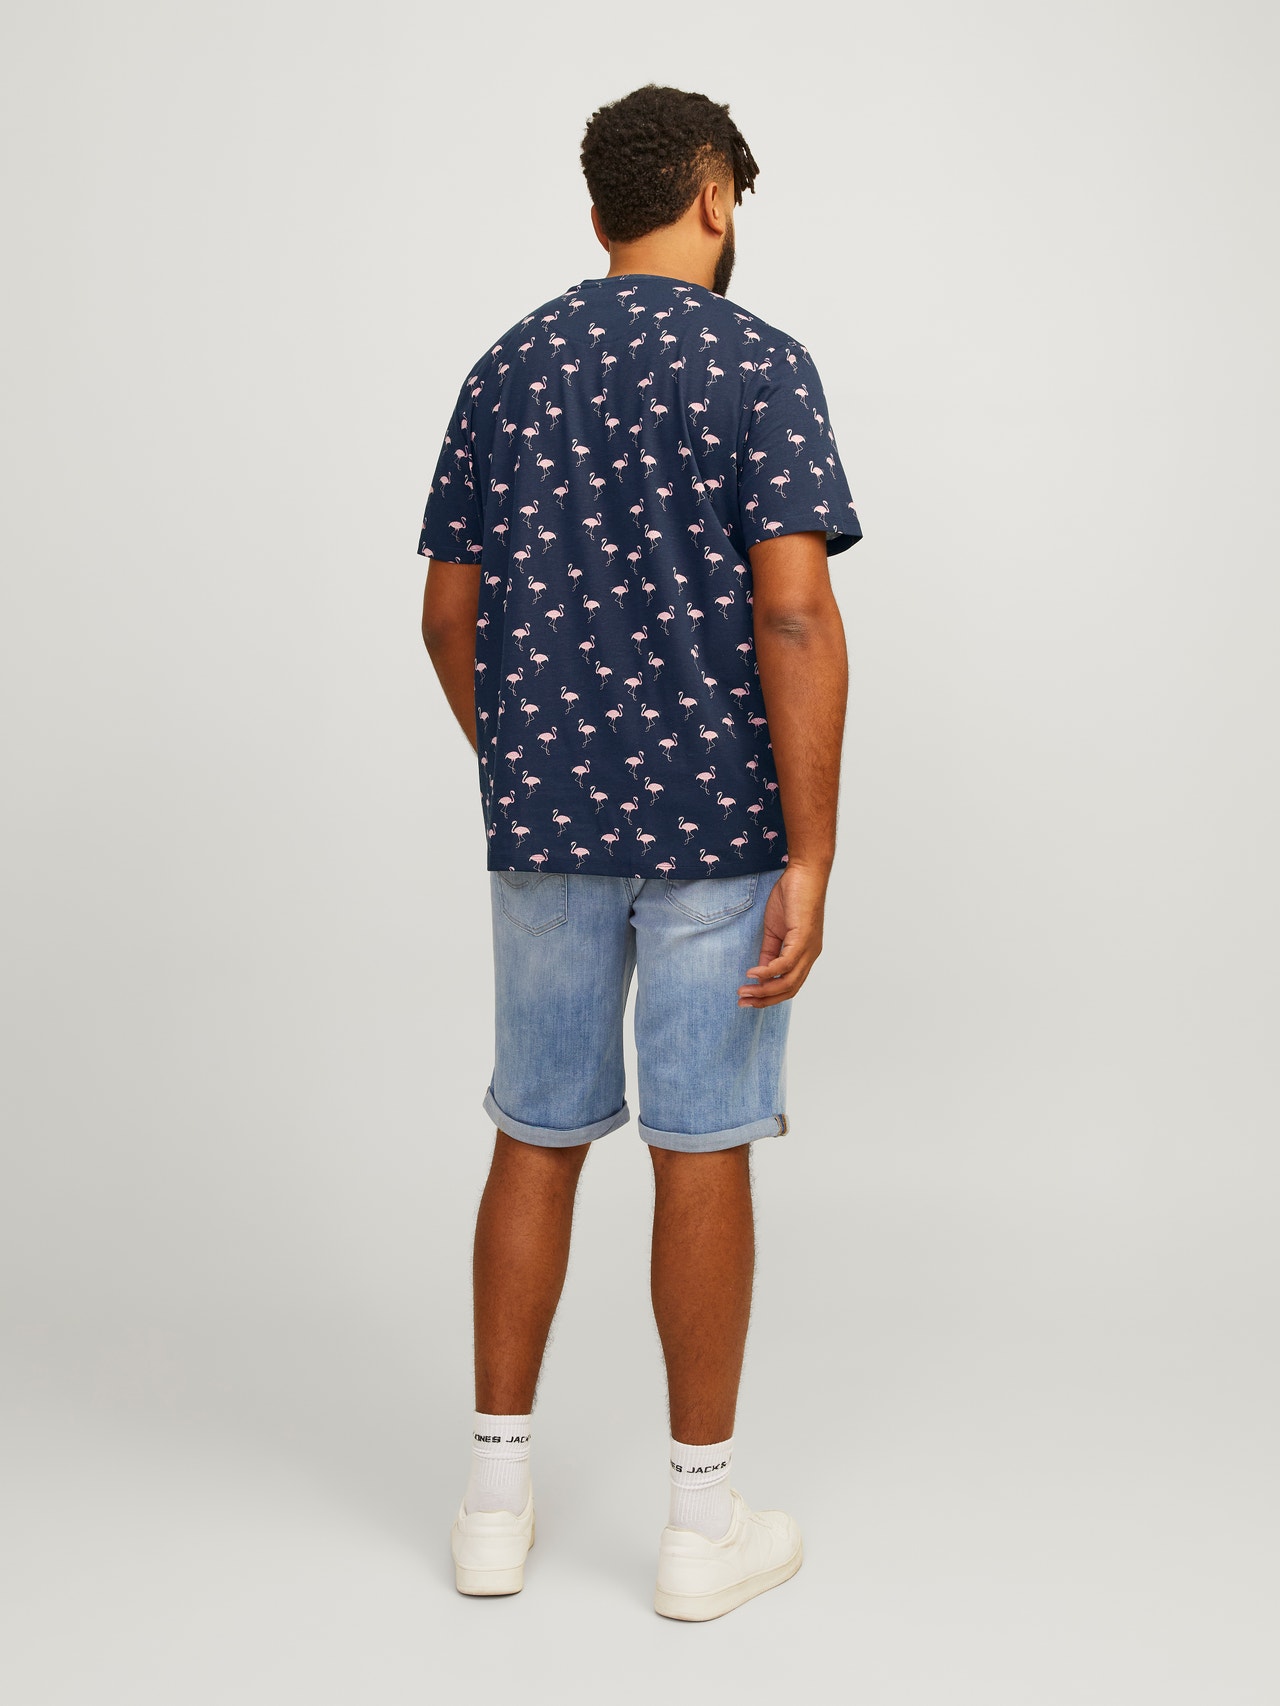 Jack & Jones Plus Size T-shirt All Over Print -Navy Blazer - 12254908